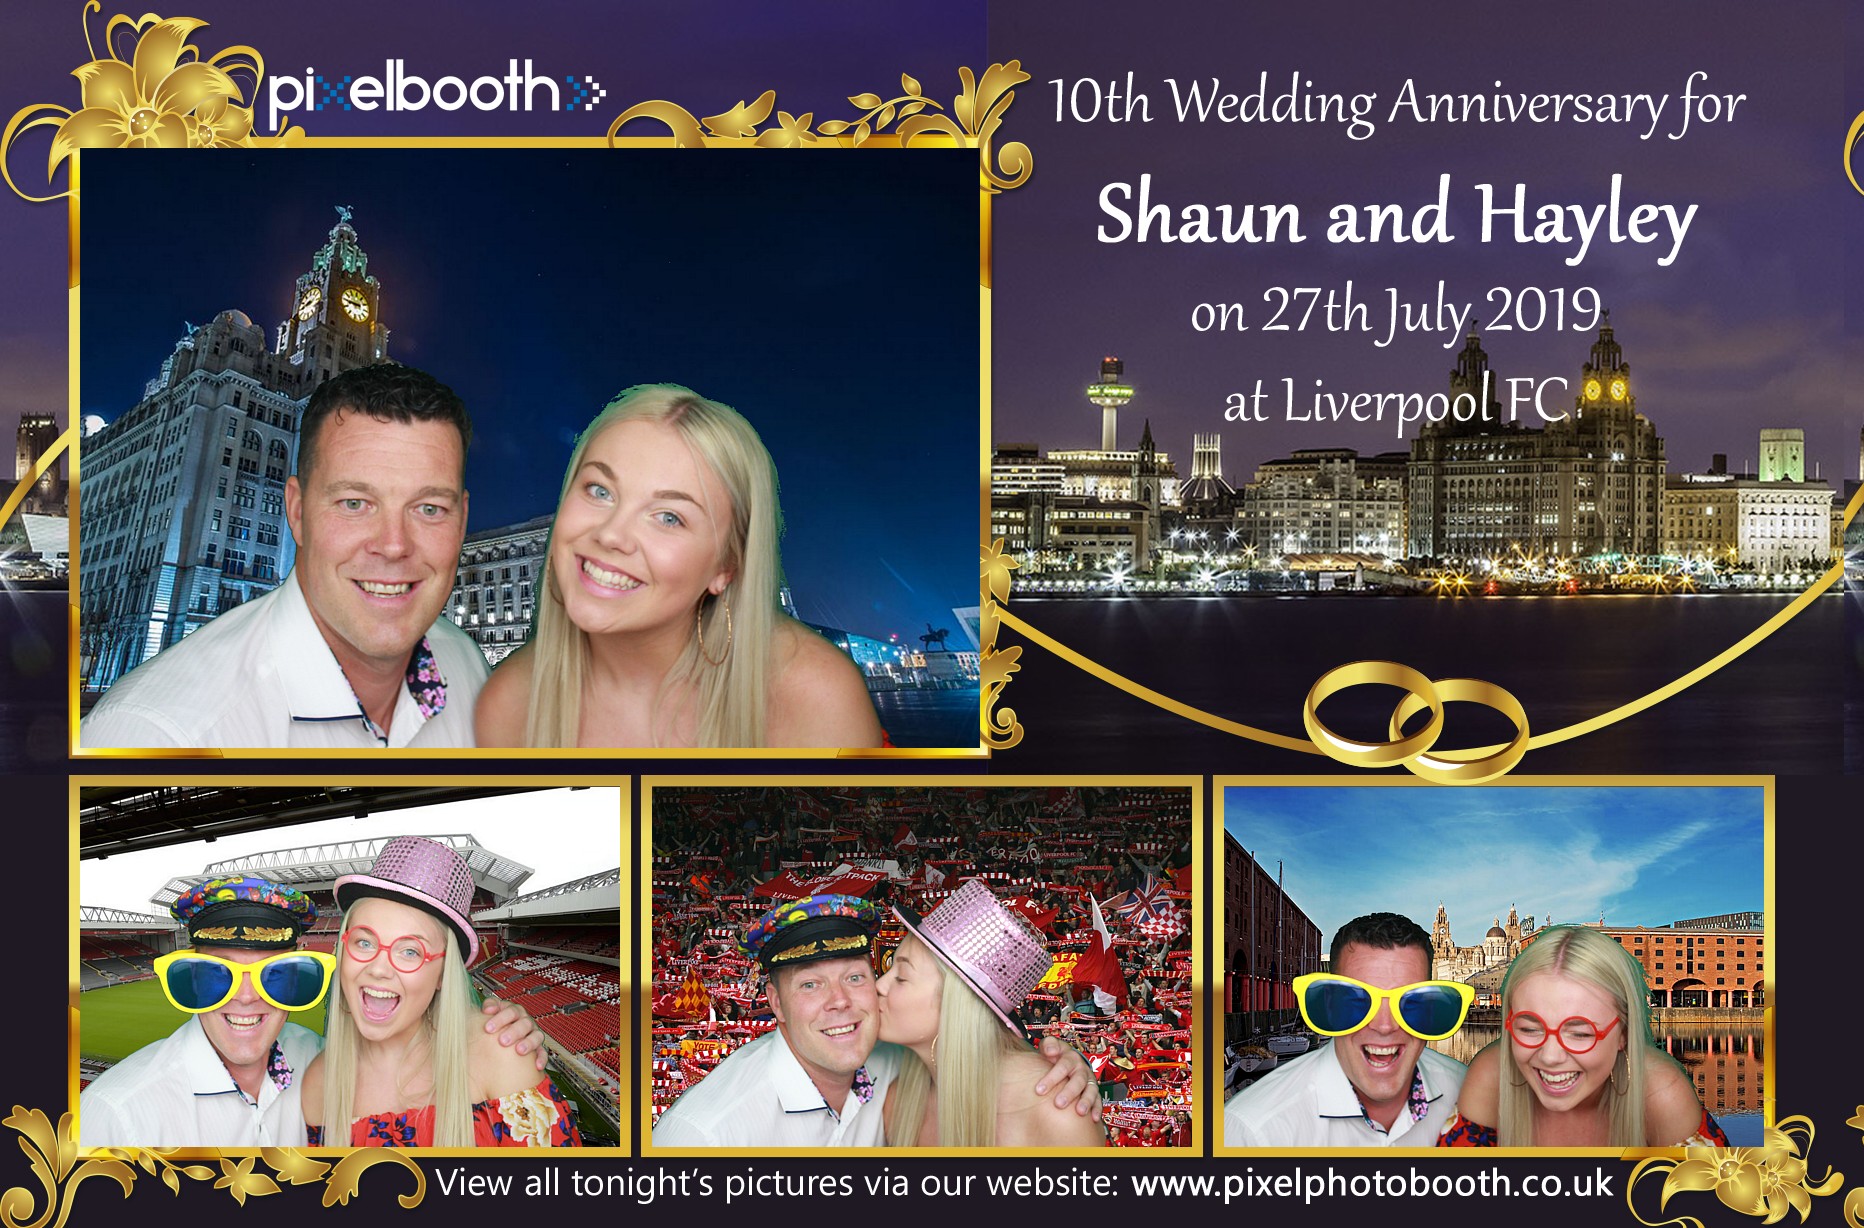 27th July 2019: Shaun and Hayley's Wedding Anniversary at LFC